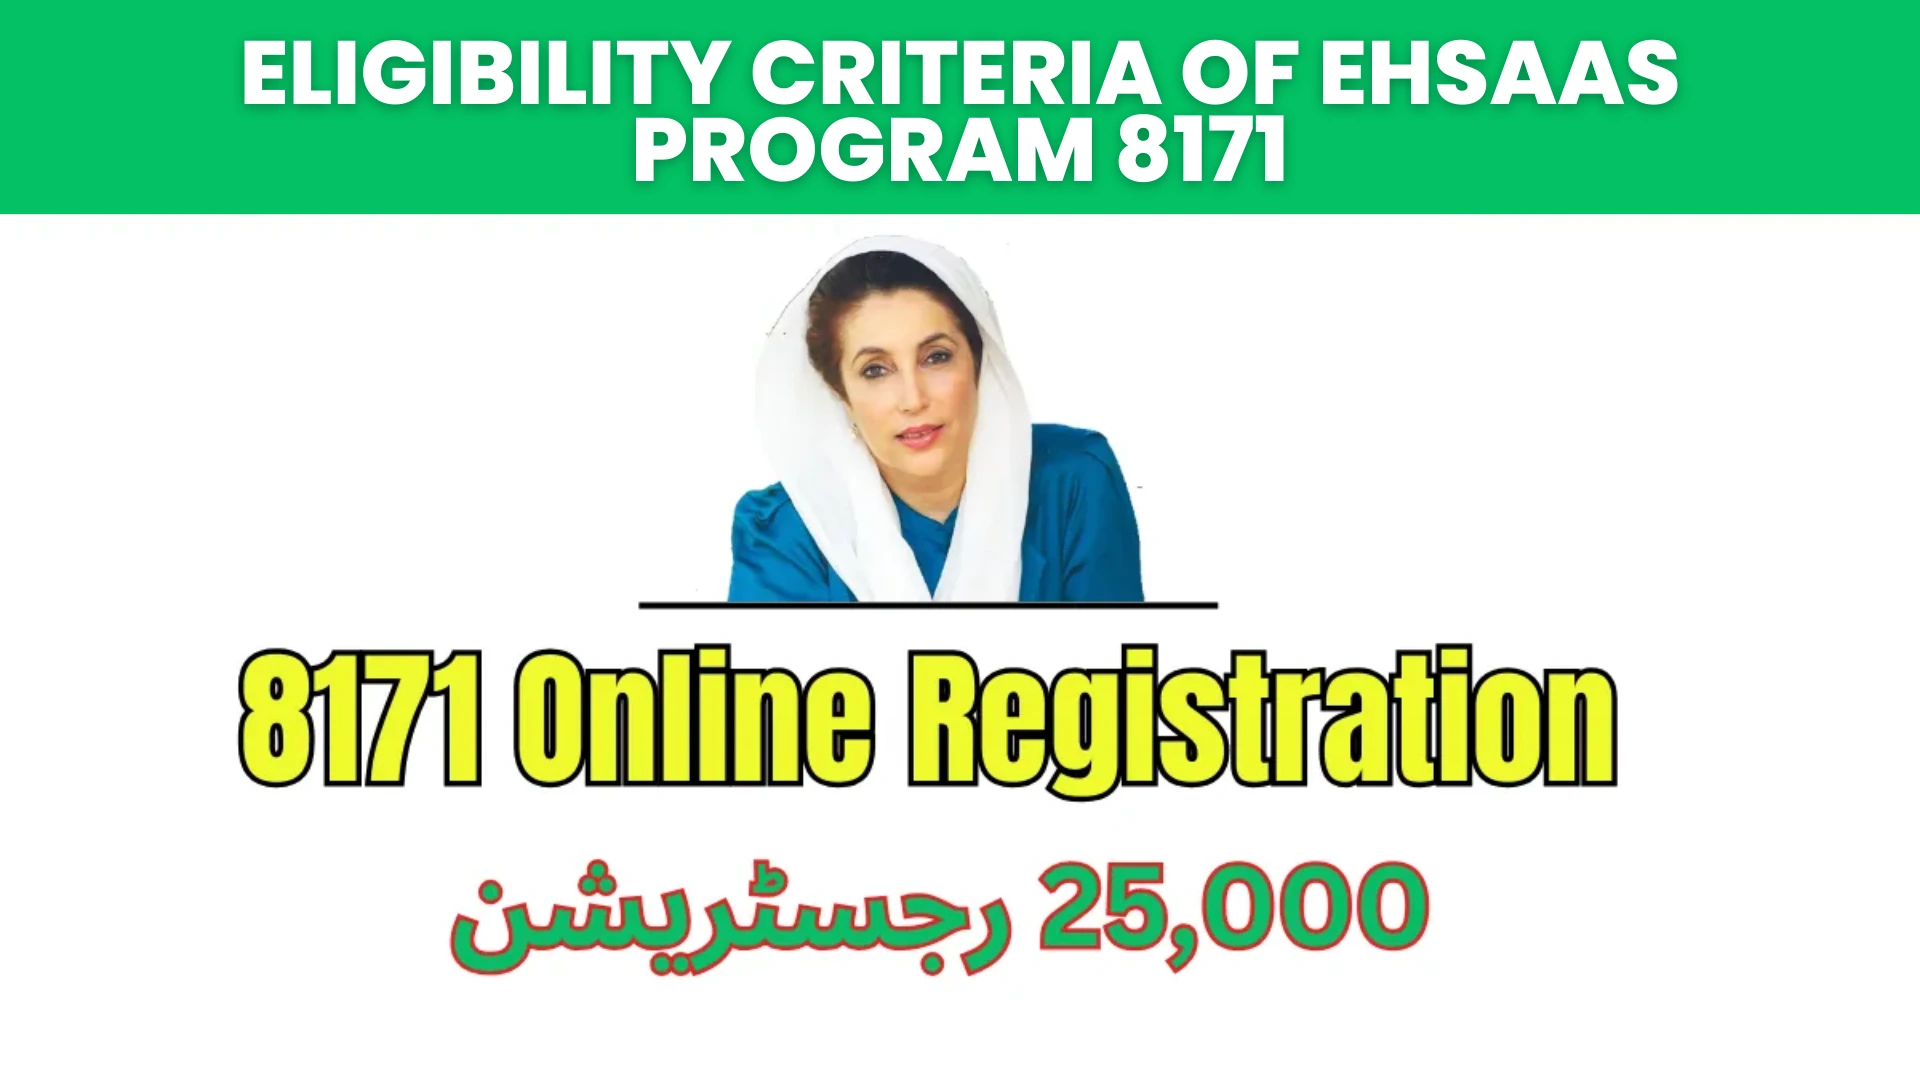 Eligibility Criteria of Ehsaas Program 8171